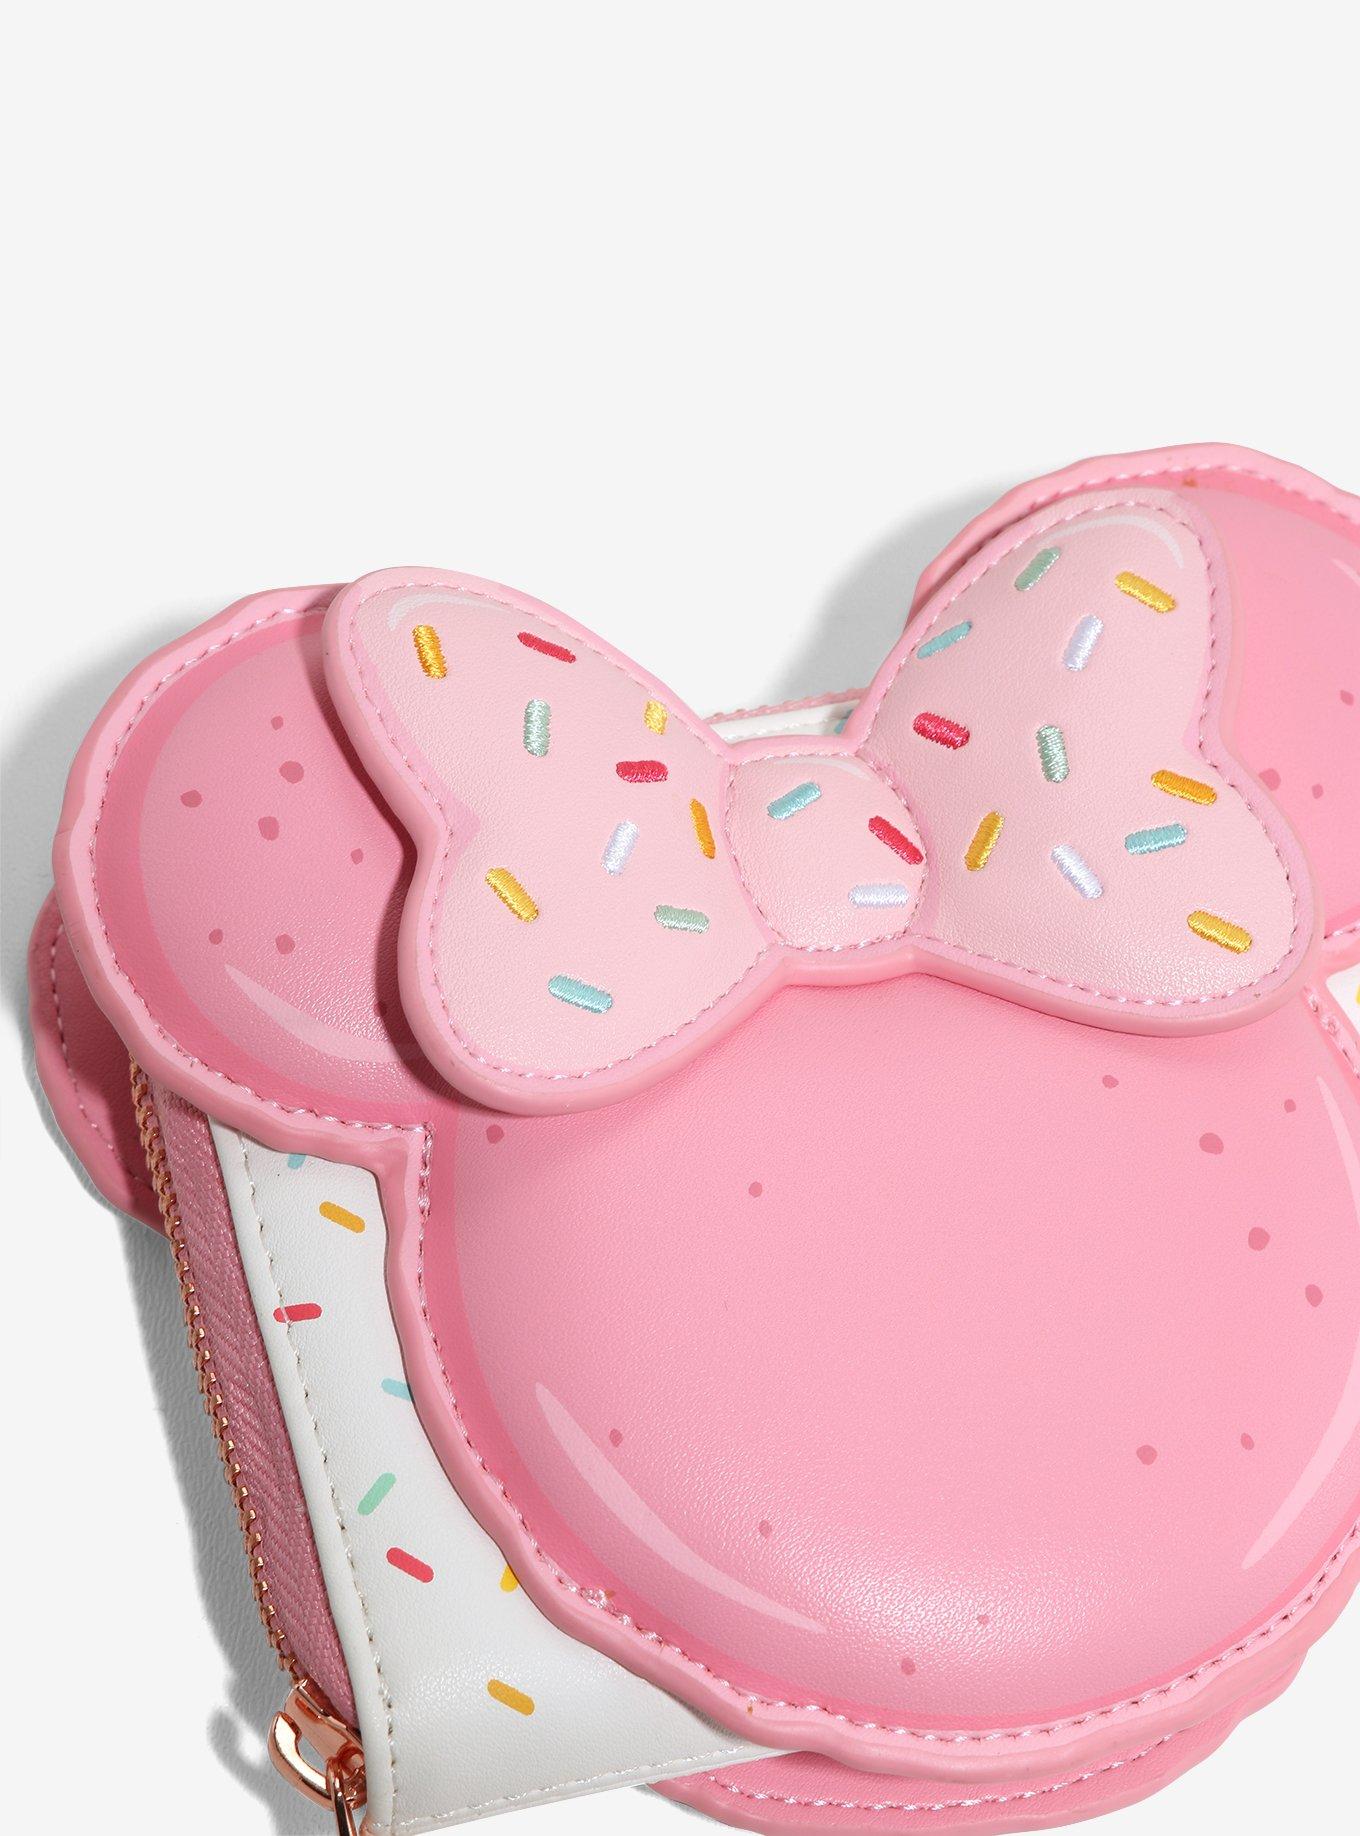 Loungefly Disney Minnie Mouse Macaron Sprinkle Small Zip Wallet, , alternate